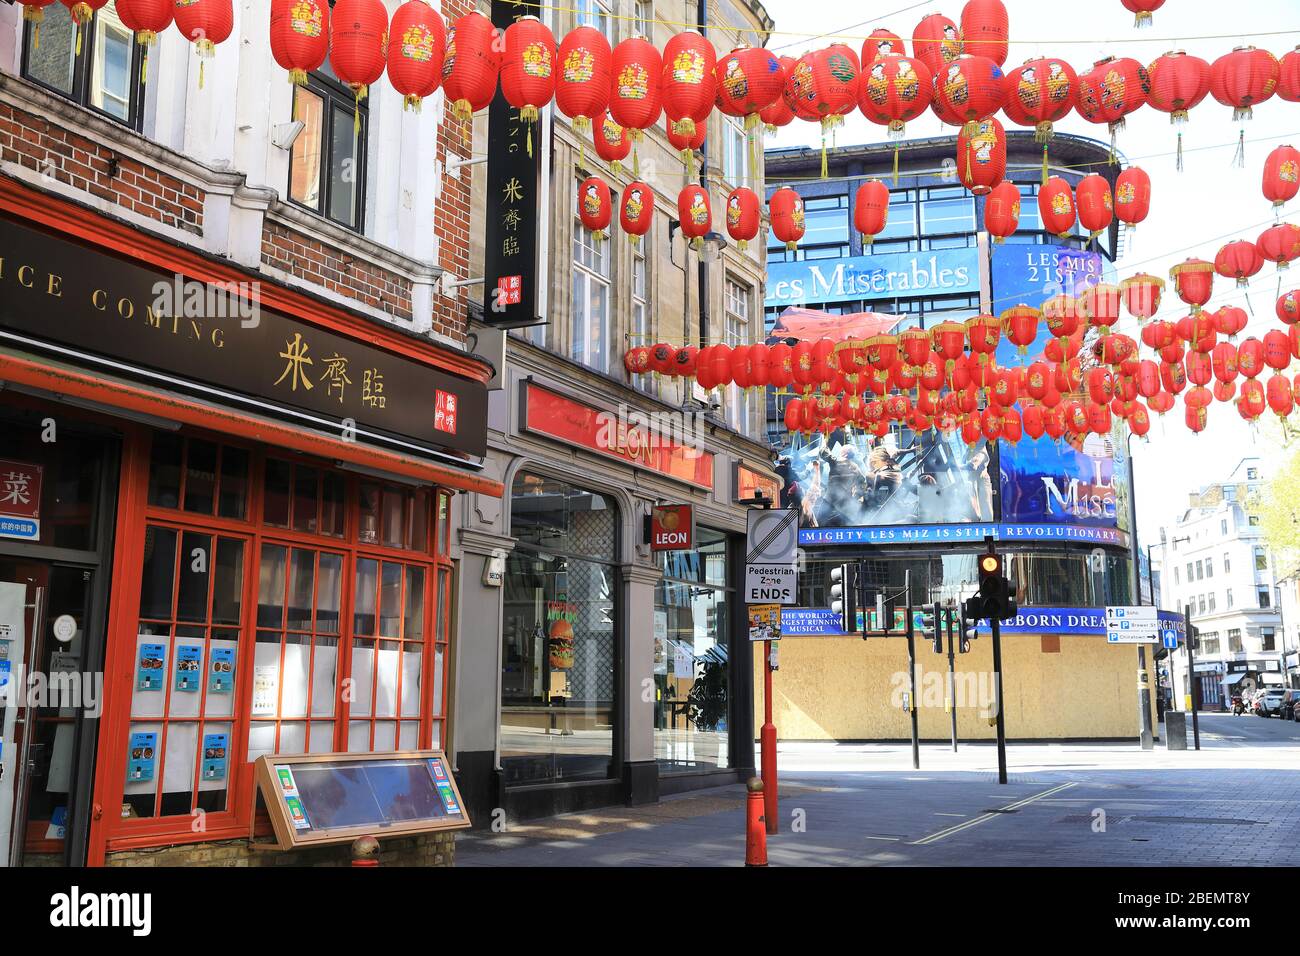 Deserted Chinatown during the coronavirus pandemic lockdown, in central London, UK Stock Photo